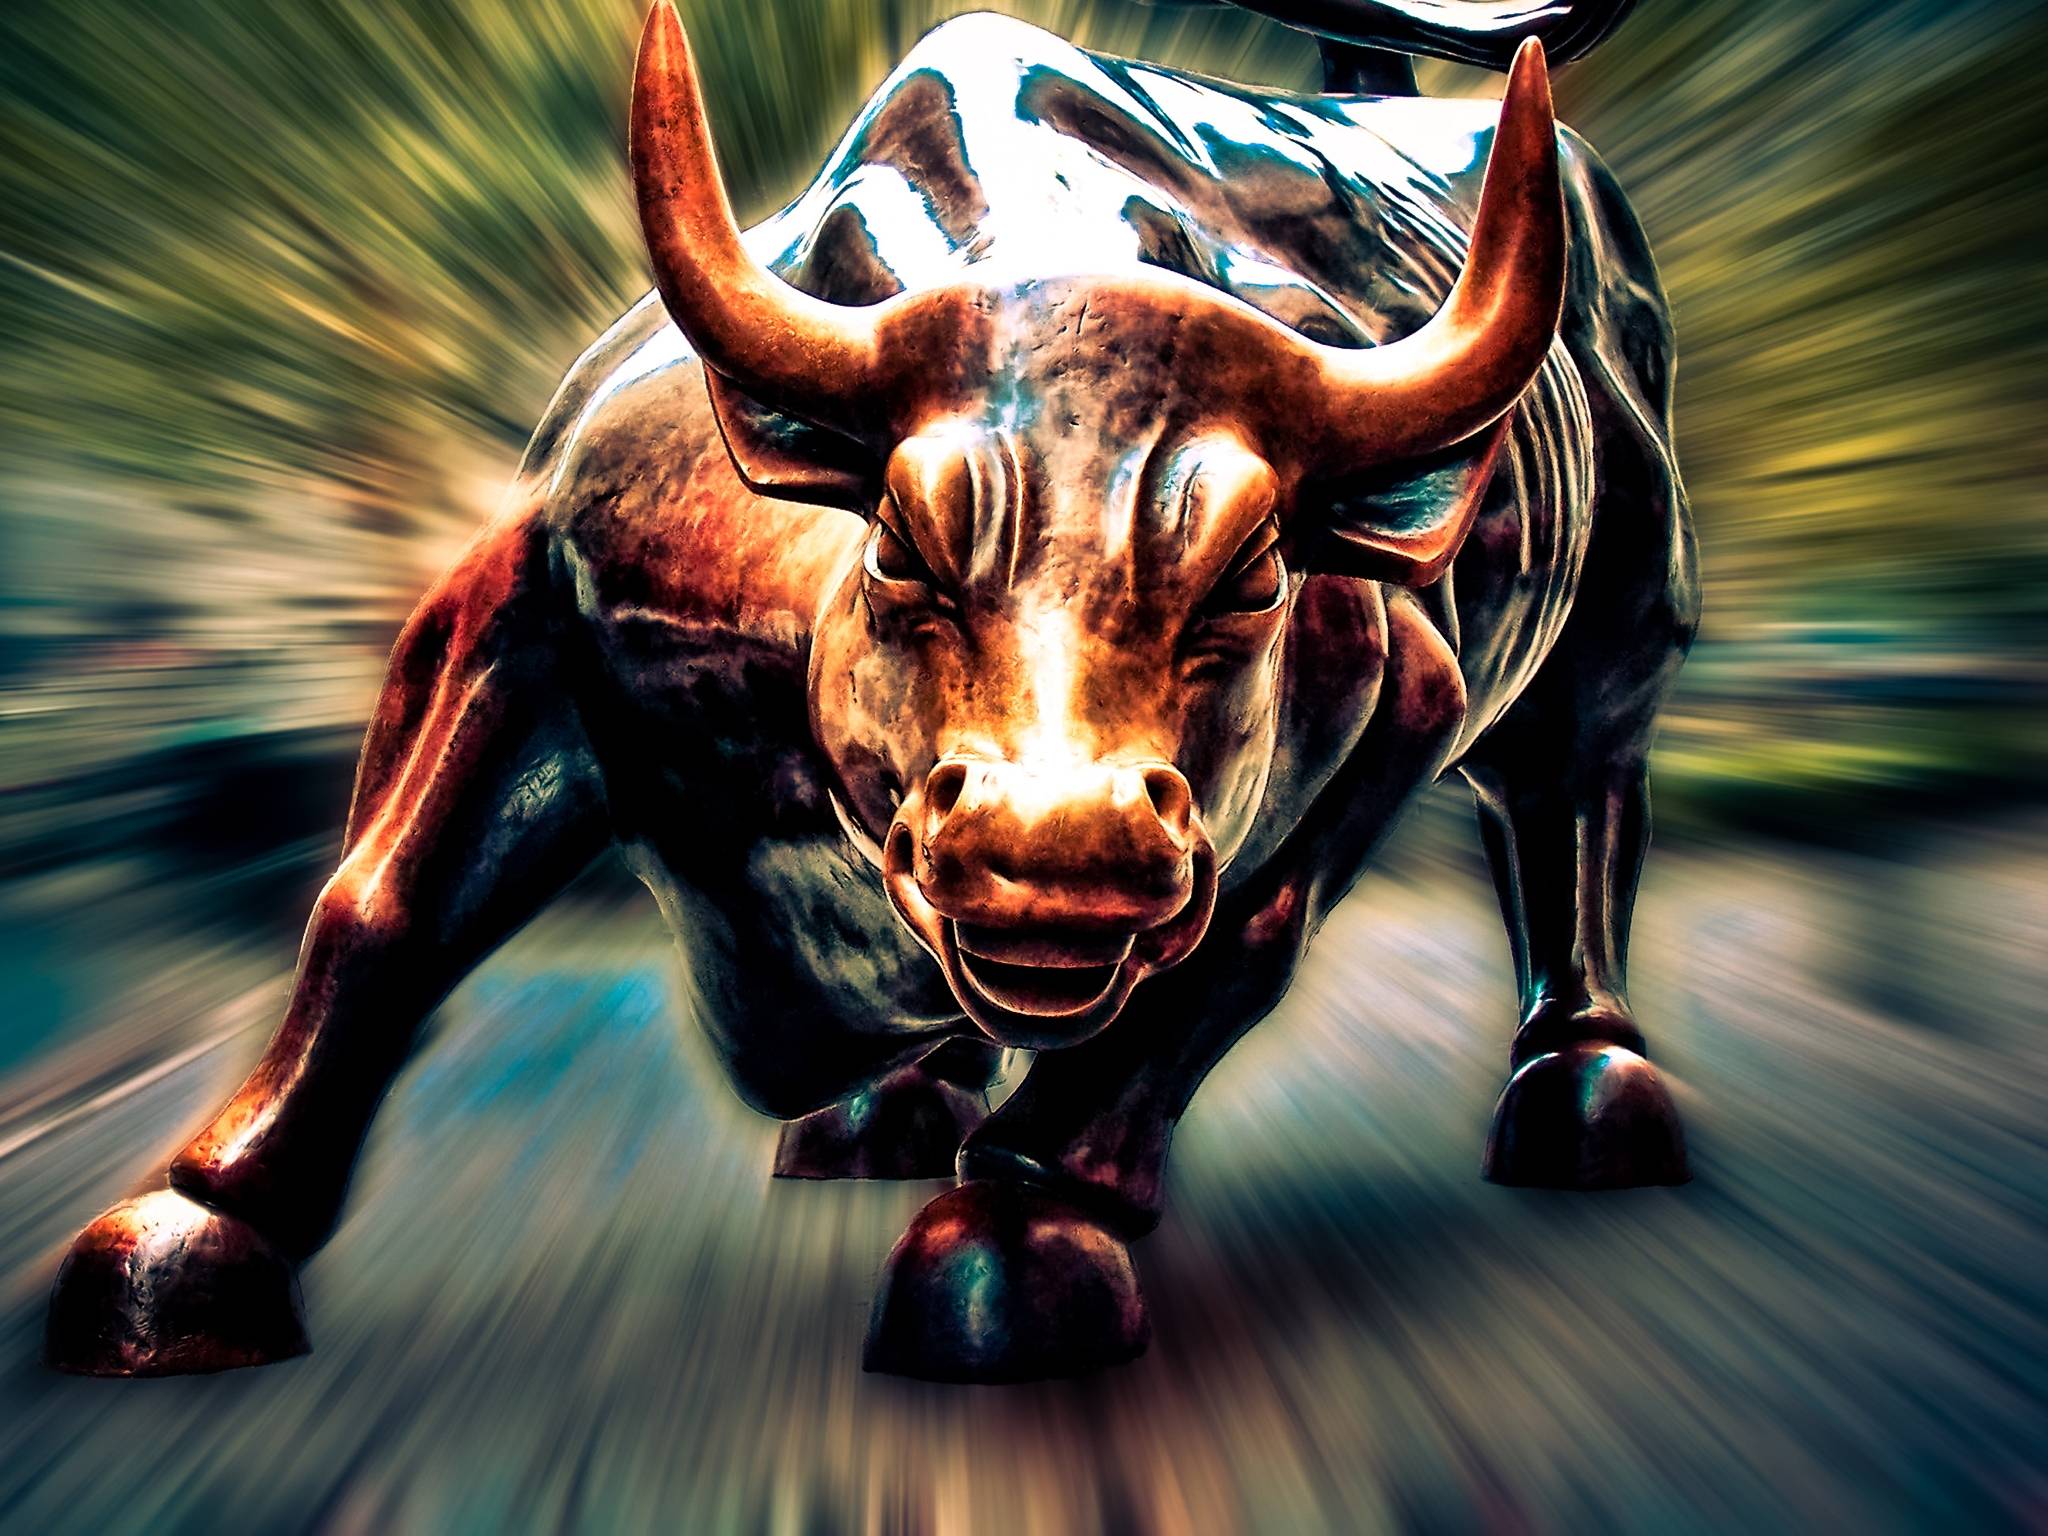 Wall Street Bull Wallpaper. vergapipe